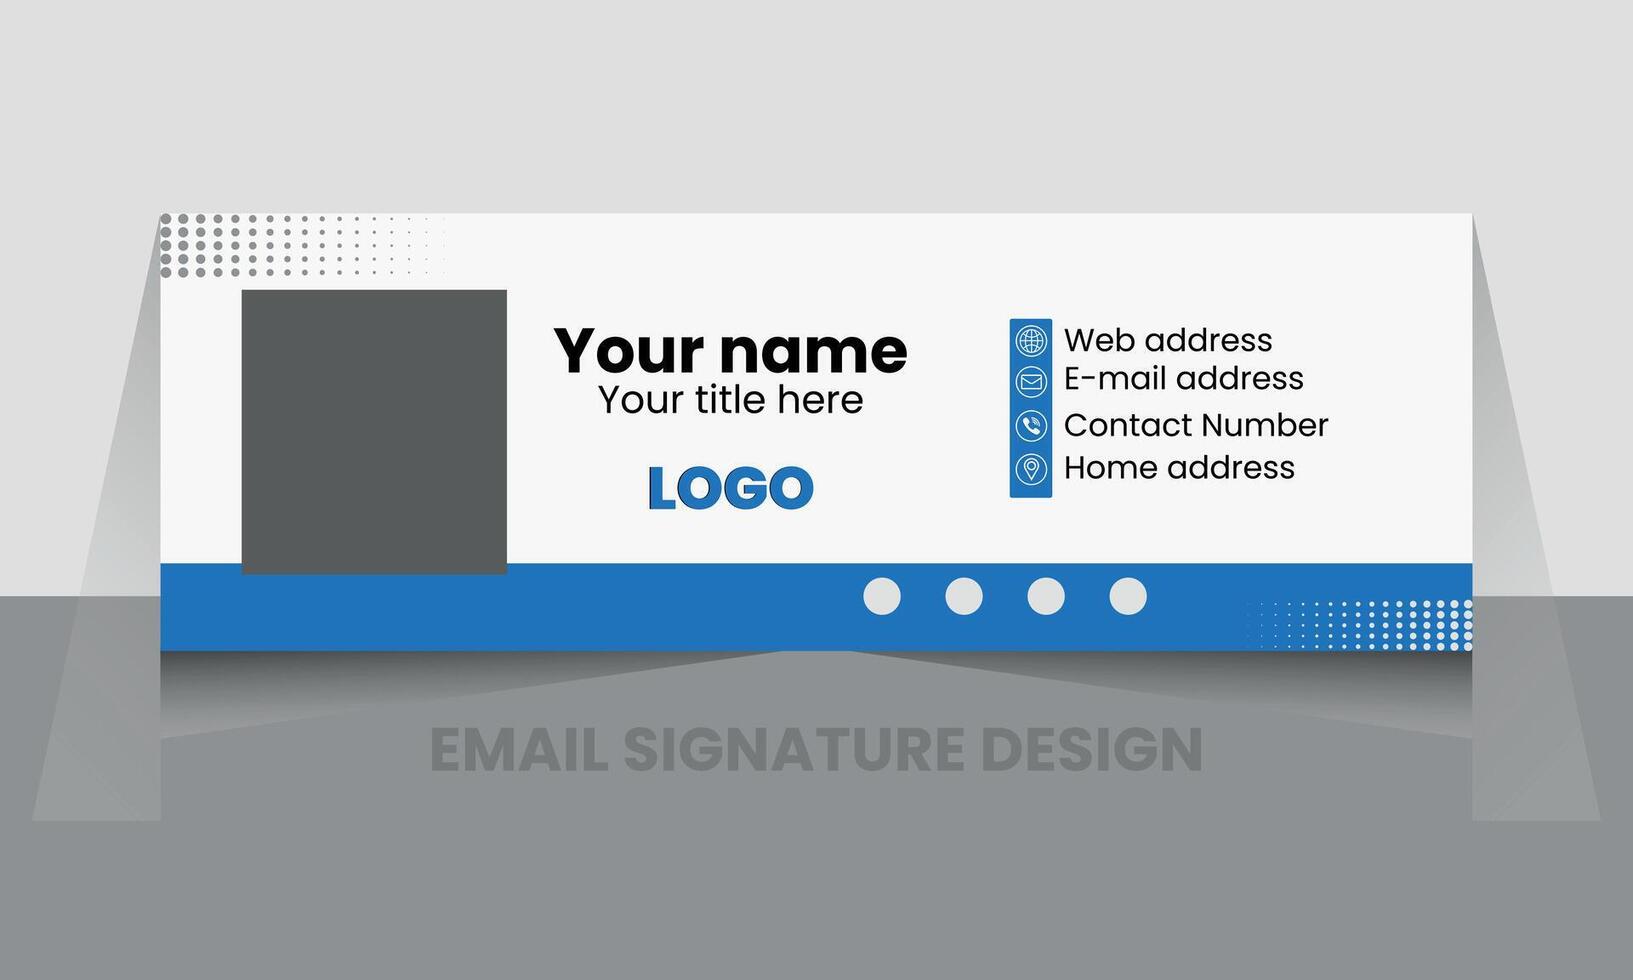 e-post signatur design eller e-post sidfot design vektor